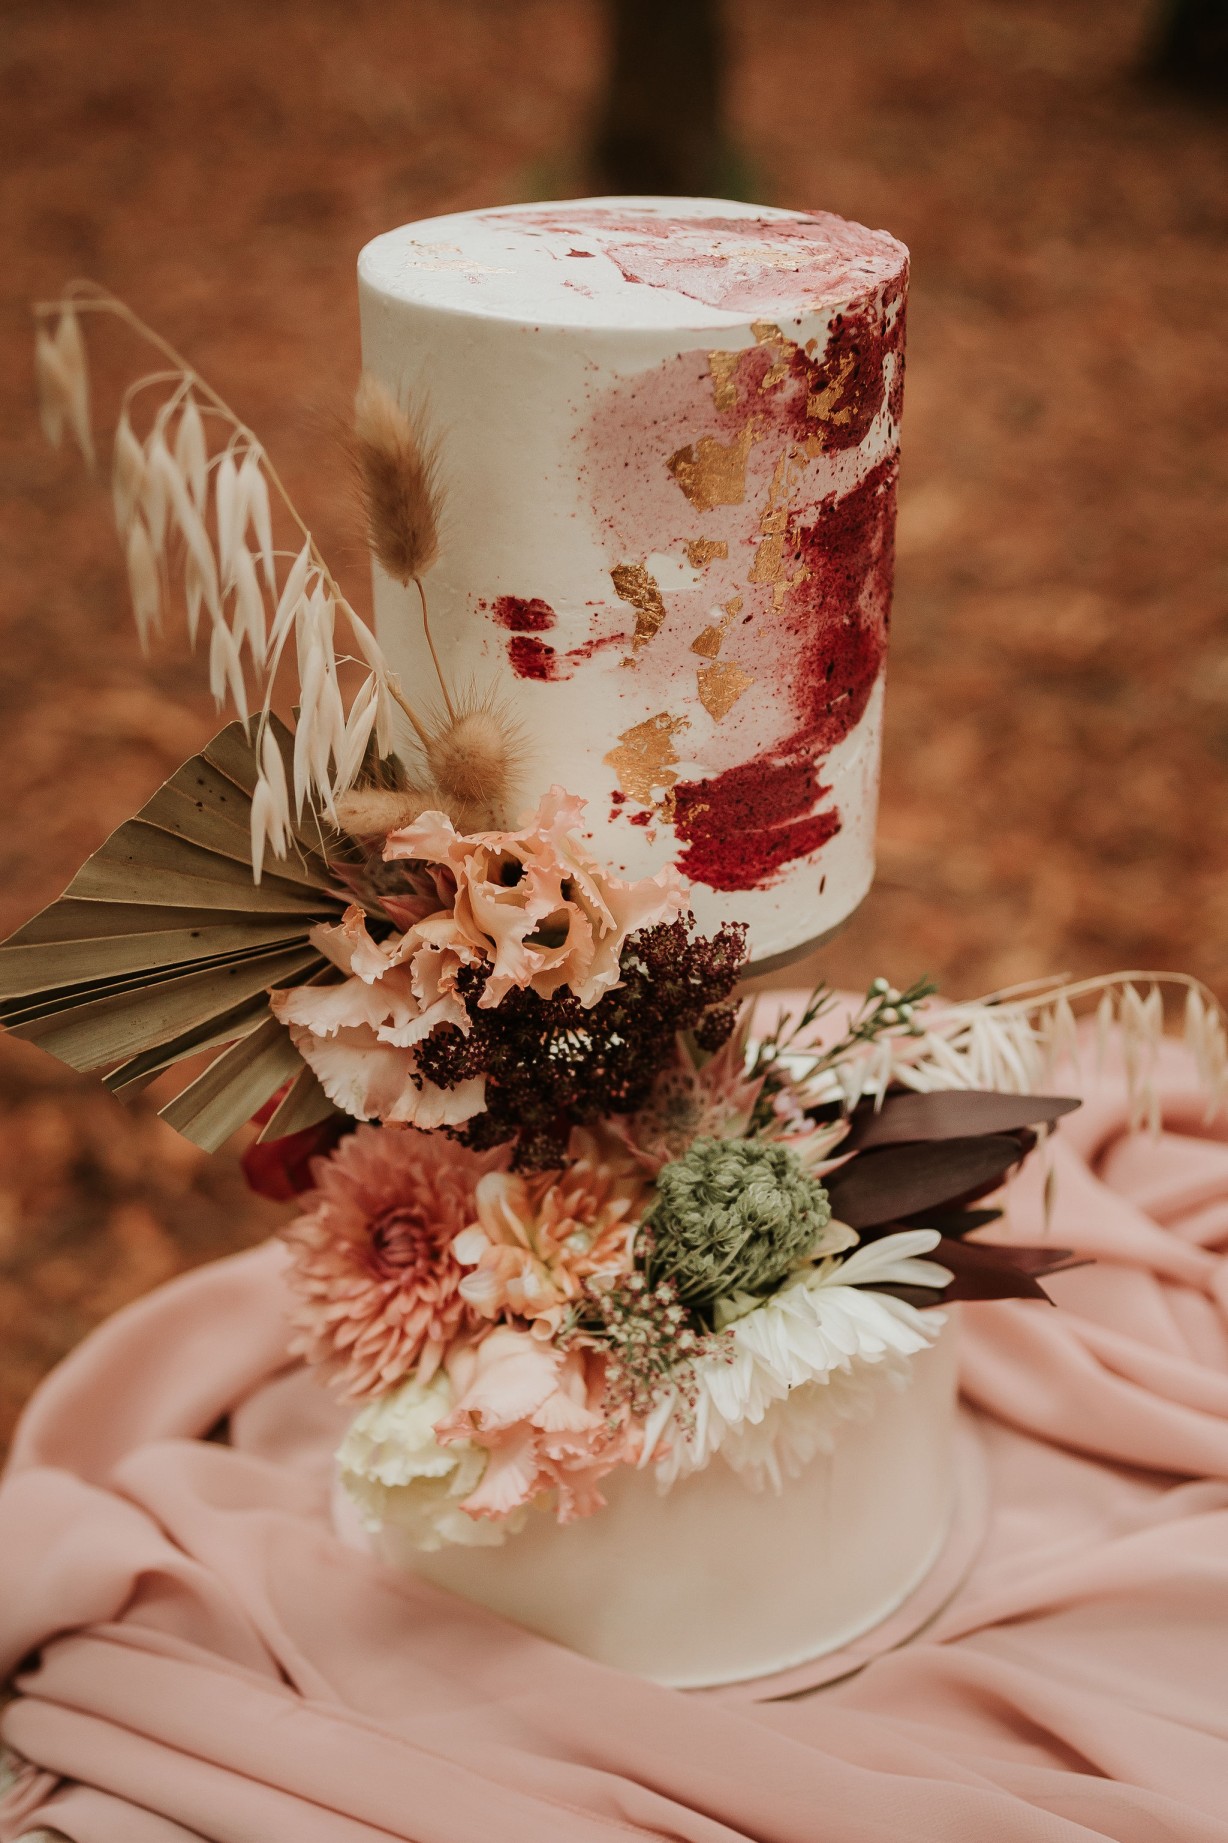 artistic wedding cake -alternative wedding cake - unique wedding cake - watercolour wedding cake - wedding cake art